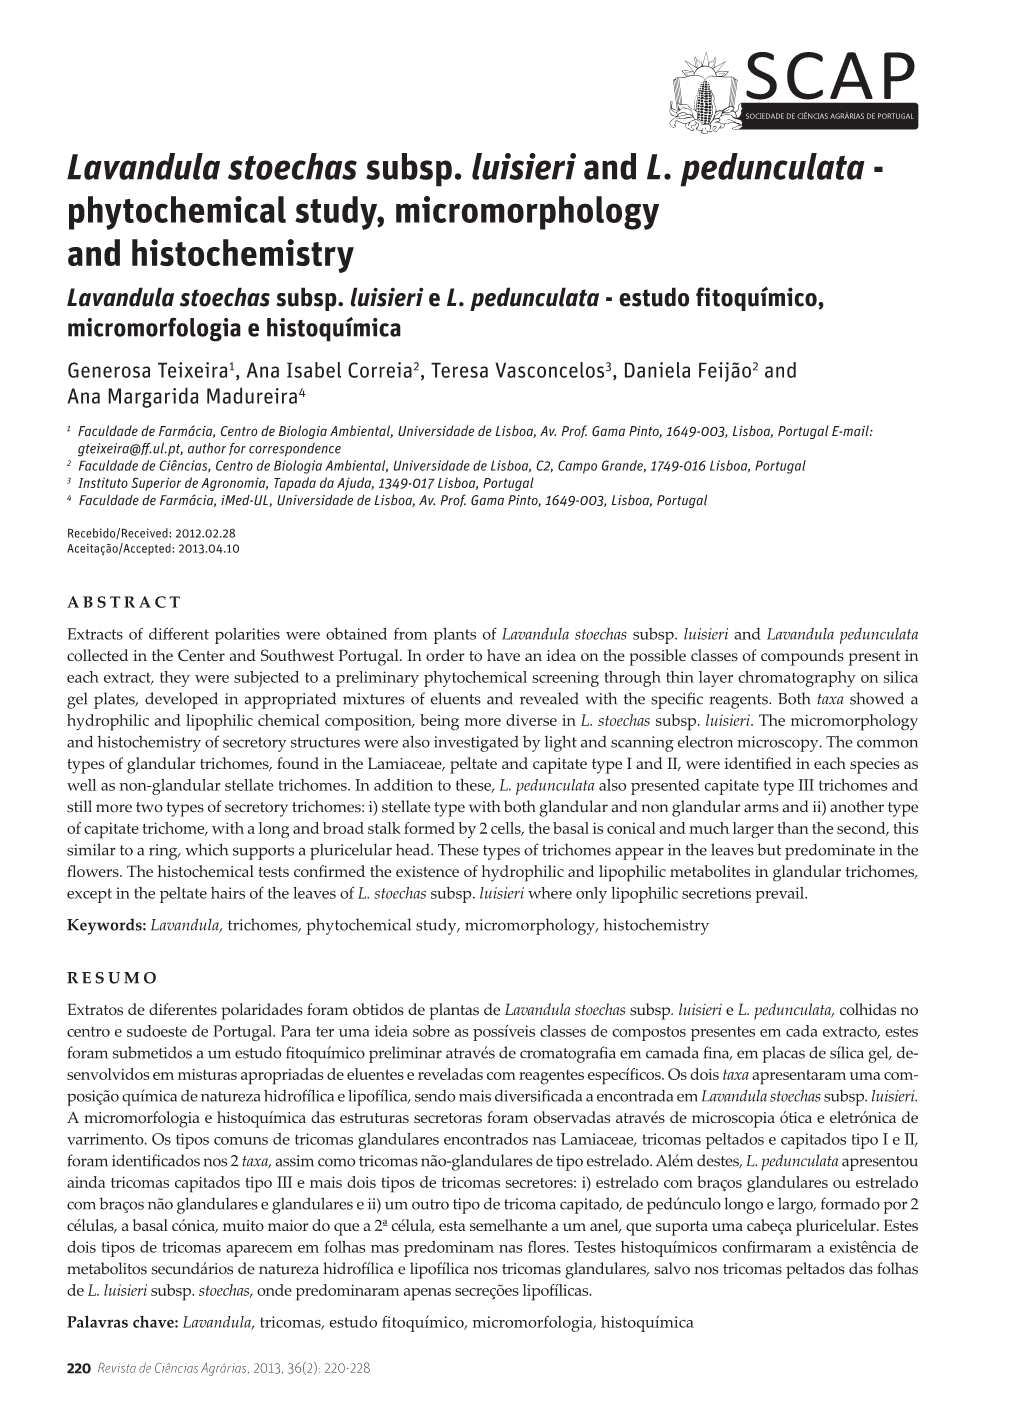 Lavandula Stoechas Subsp. Luisieri and L. Pedunculata - Phytochemical Study, Micromorphology and Histochemistry Lavandula Stoechas Subsp